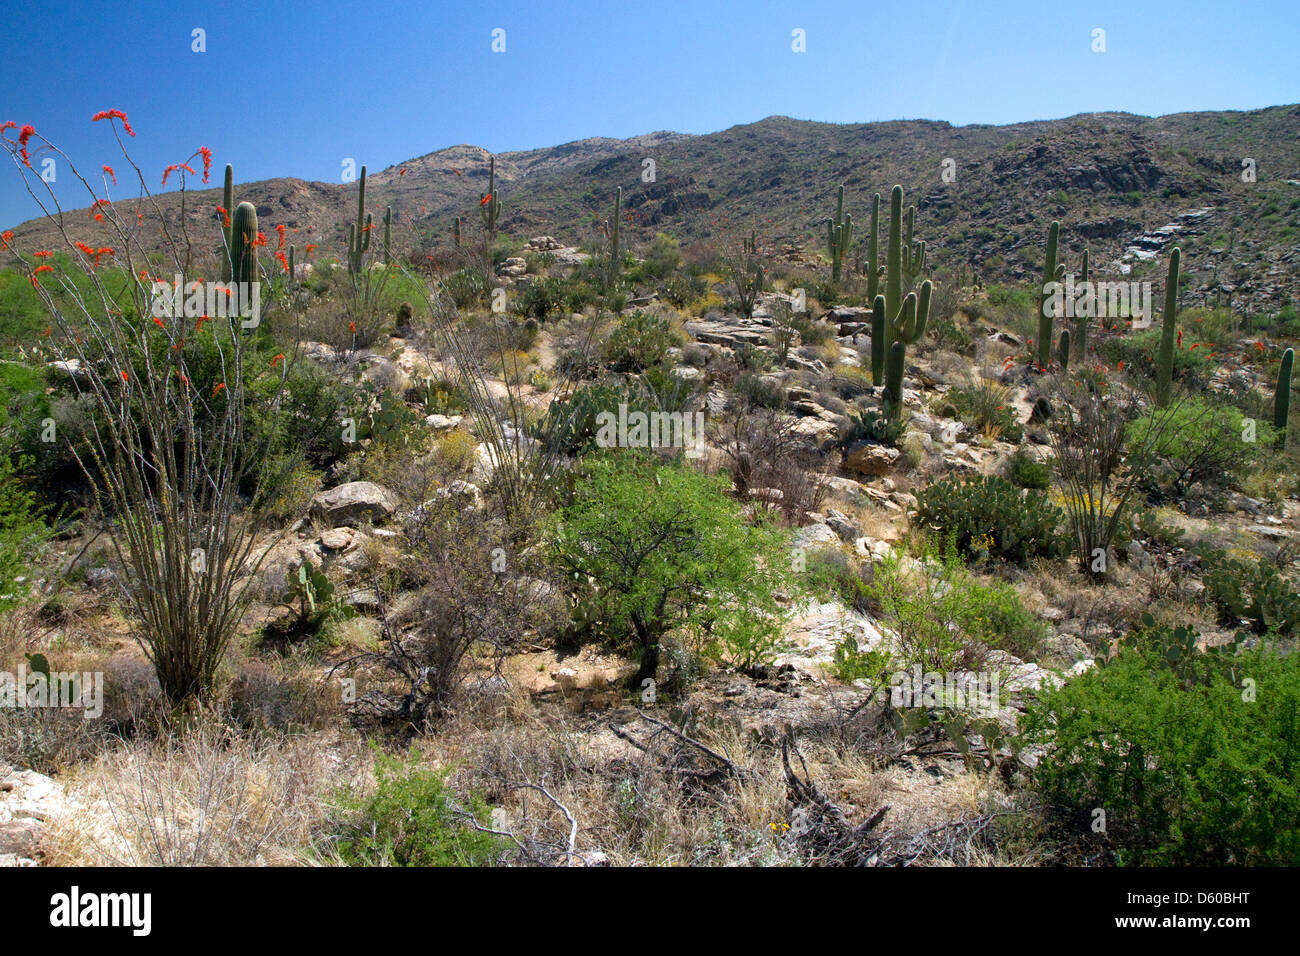 Saguaro cactus in Saguaro National Park located in southern Arizona, USA. Stock Photo